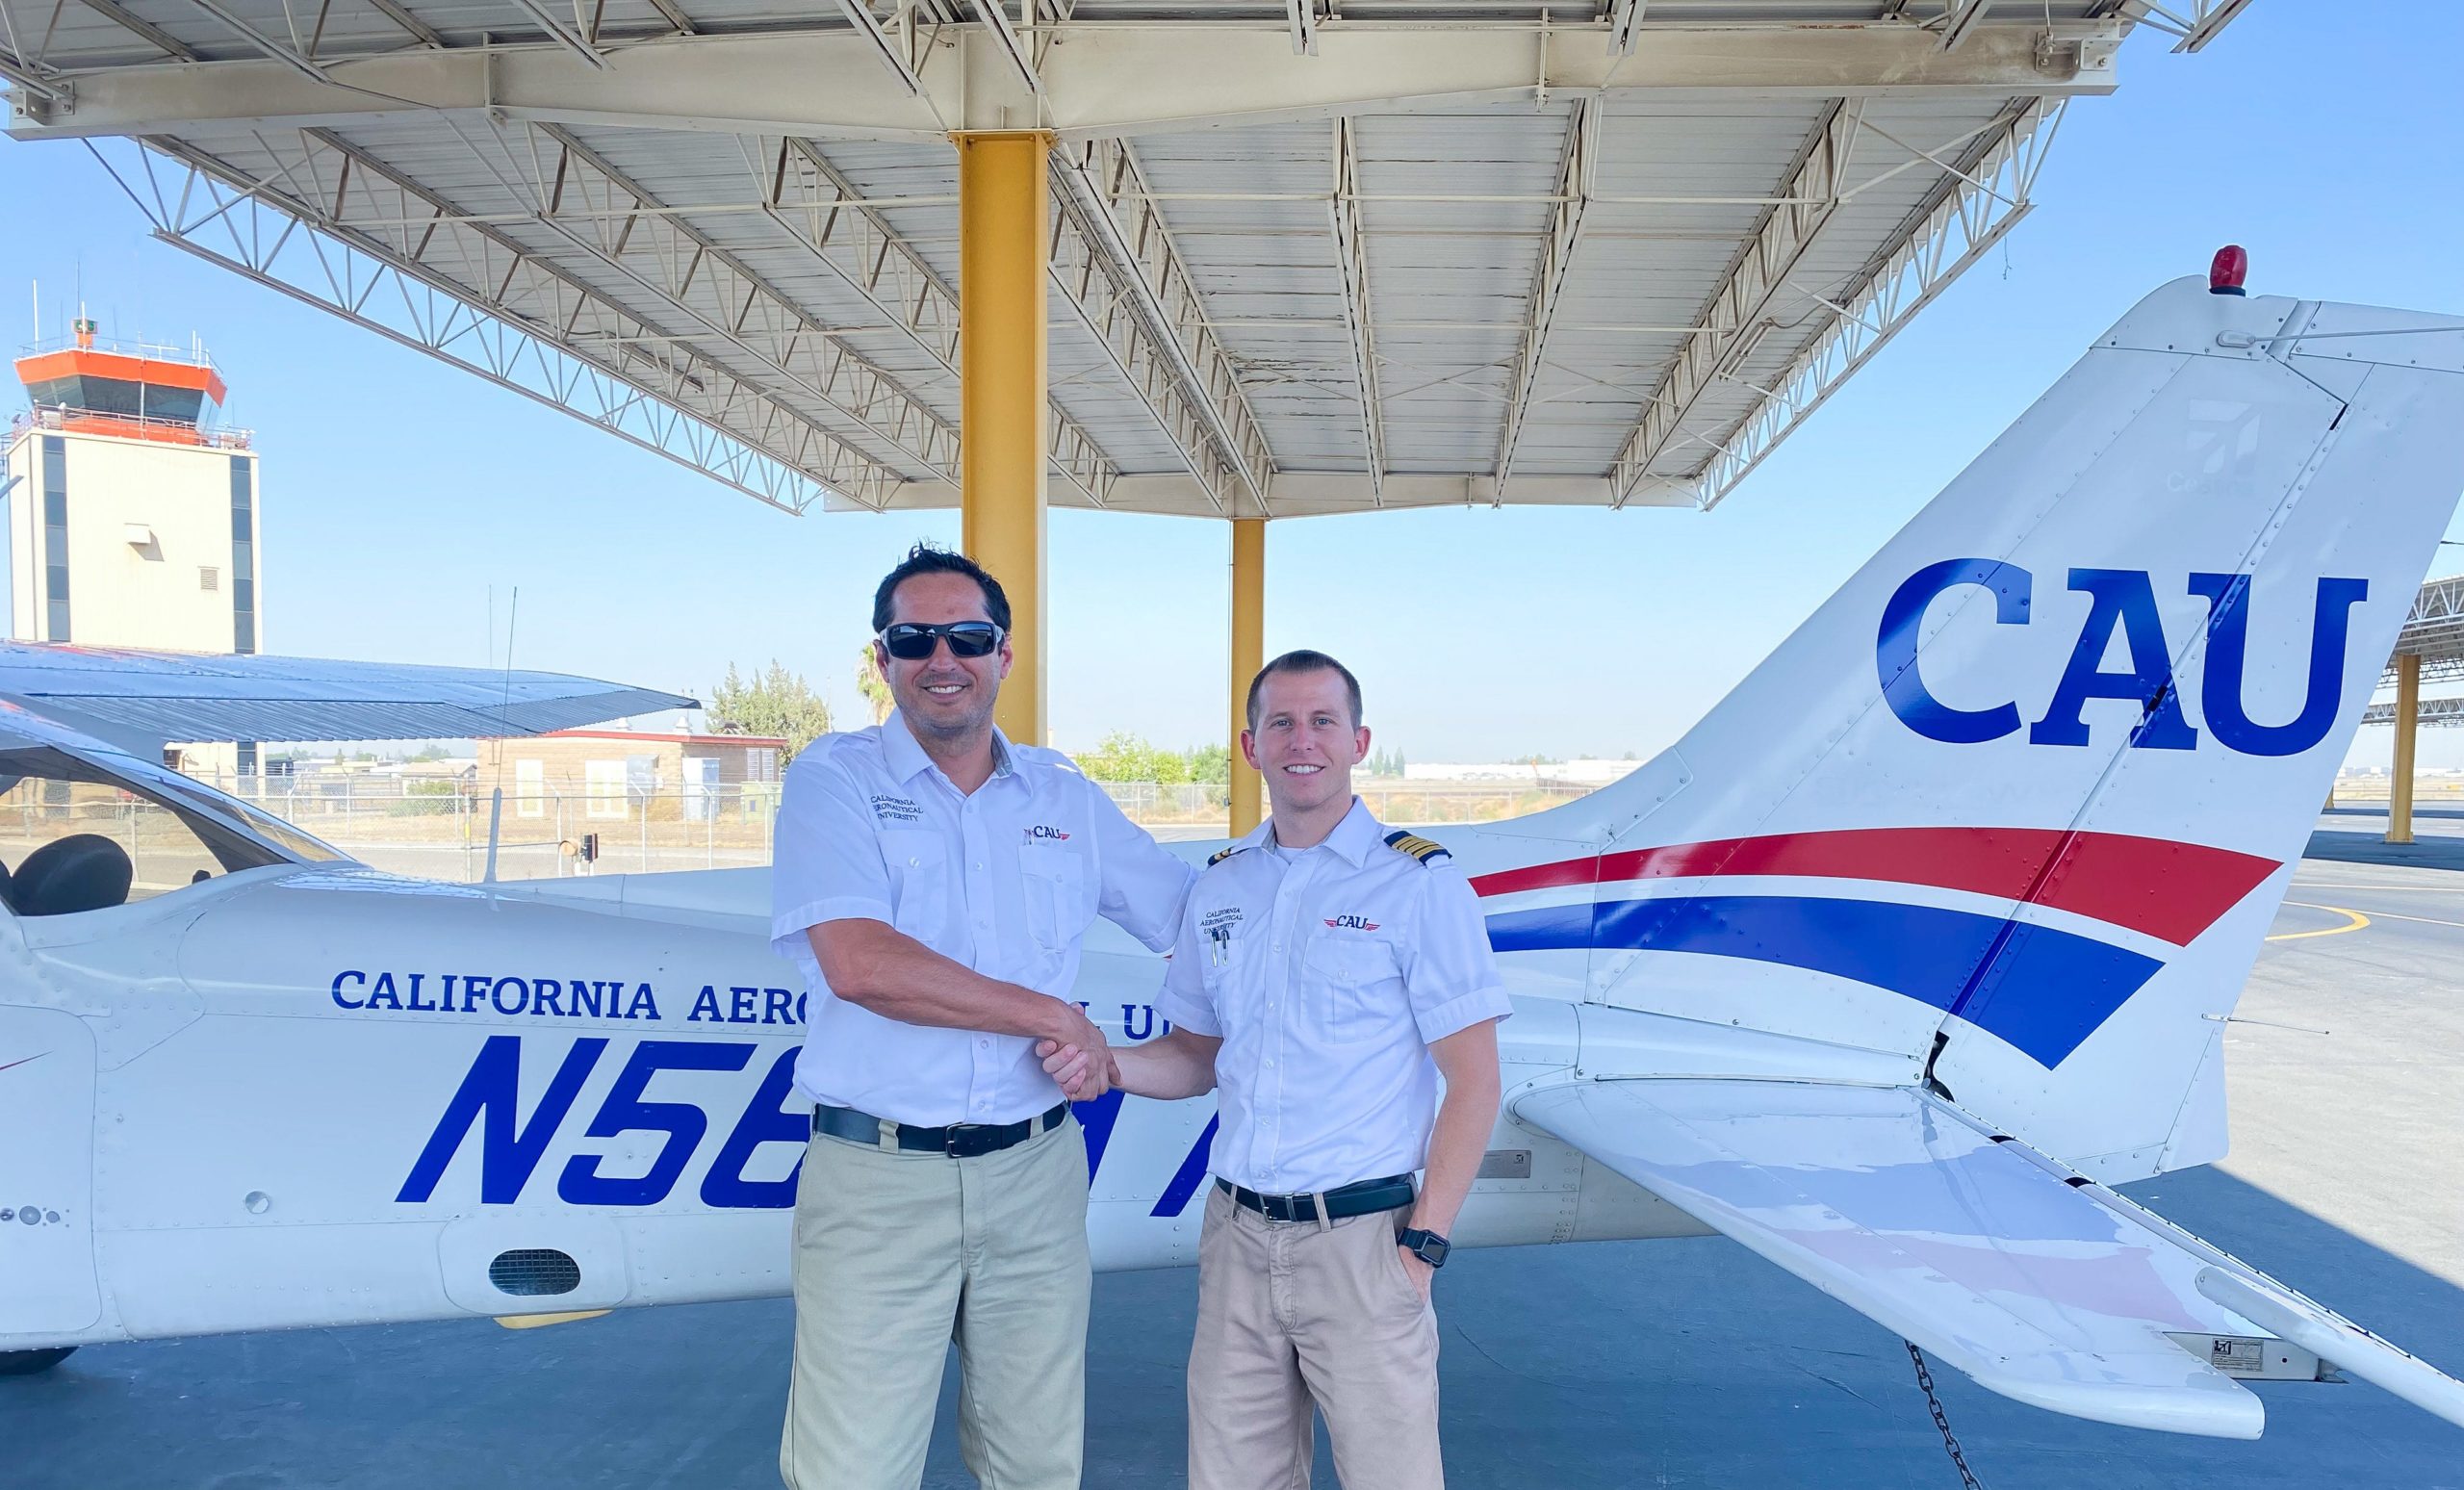 Private Pilot License Requirements - California Aeronautical University